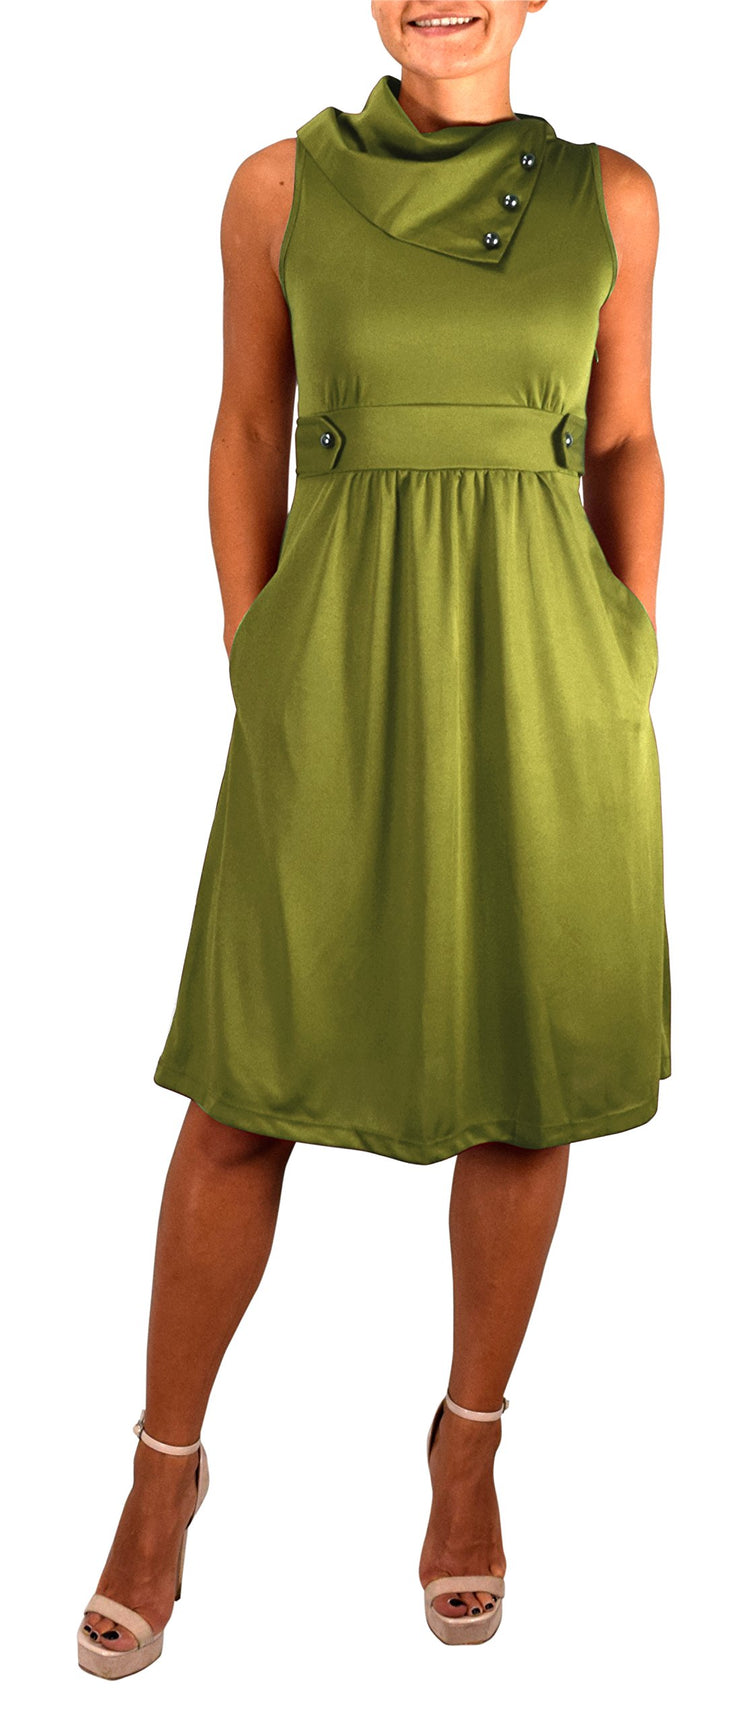 B0920-Foldover-Collar-Dress-Green-M-OS